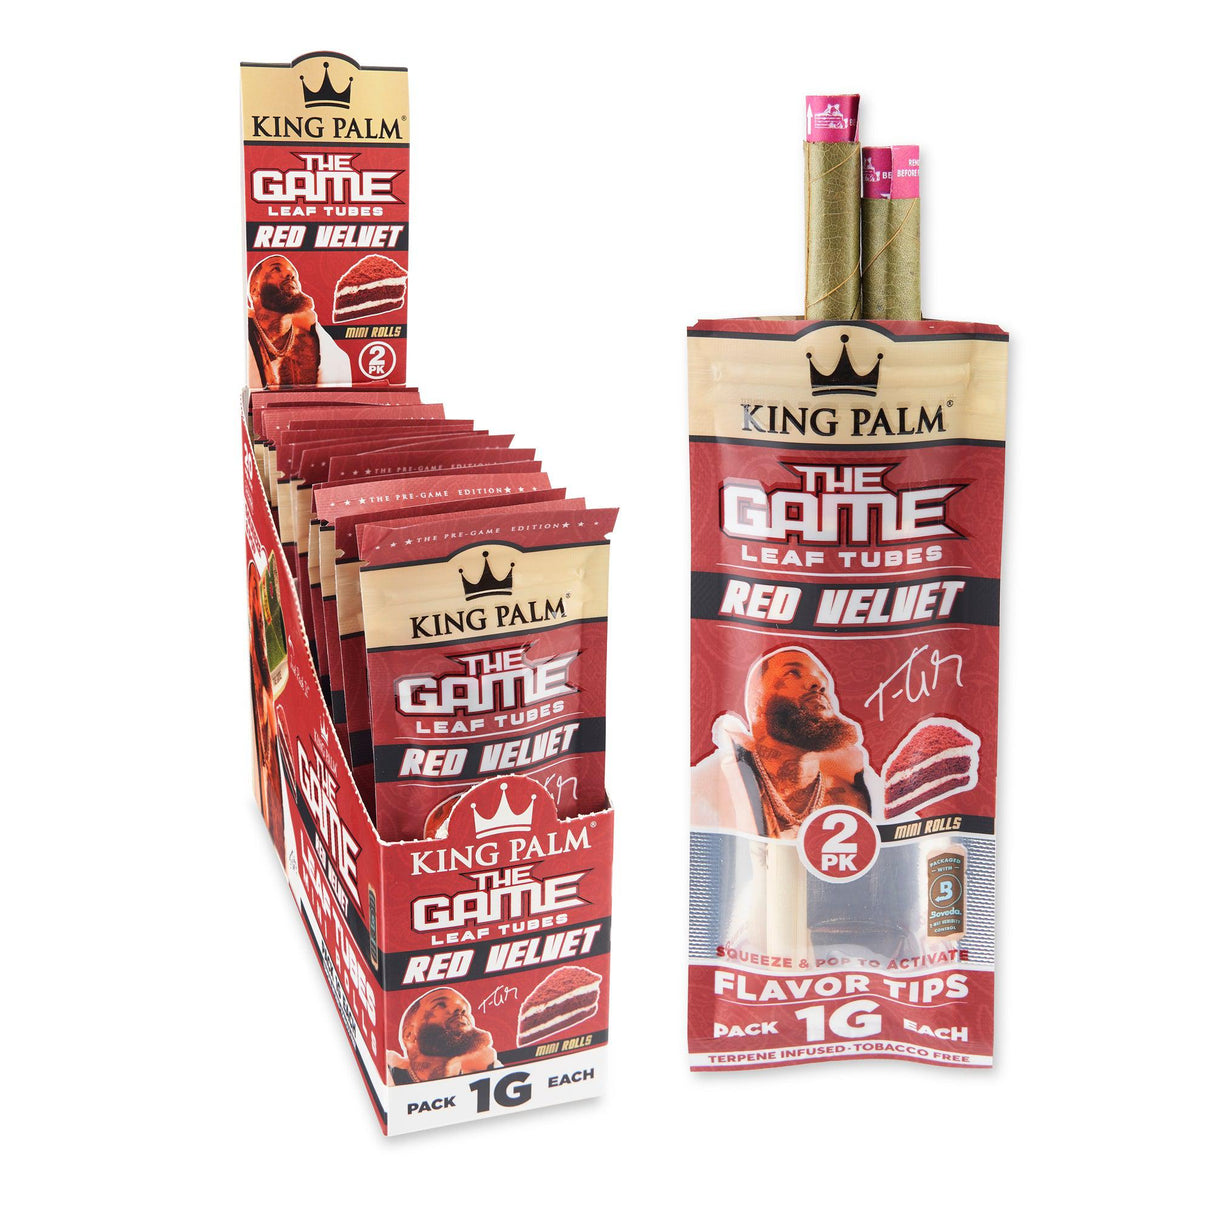 King Palm x The Game 2pk Flavored Mini Leaf Tubes 20ct – Red Velvet